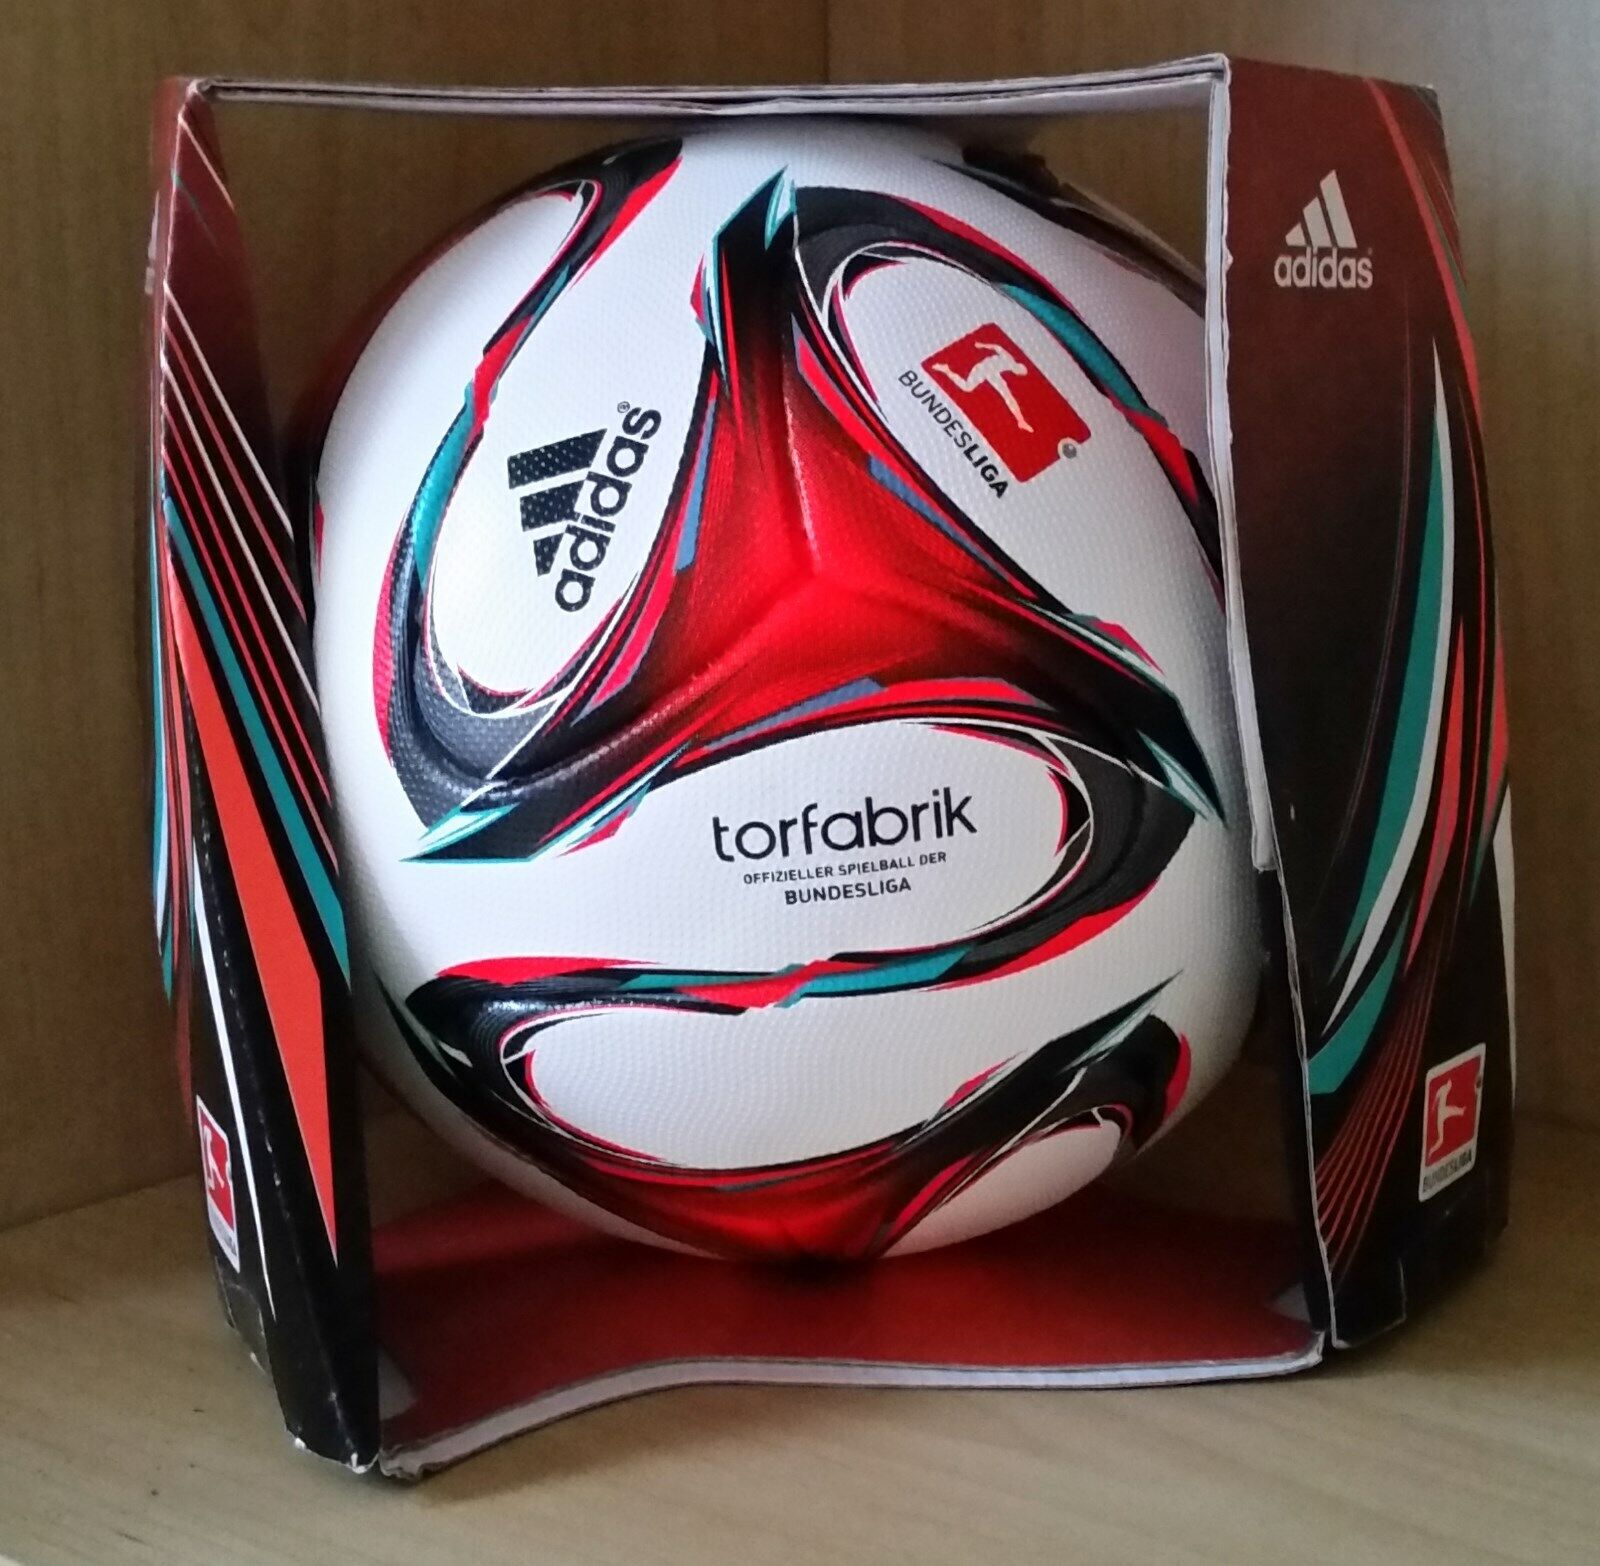 Details zu  Adidas Matchball Torfabrik 2014 Soccer Football Ballon Footgolf Voetbal Pallone Sofortige Lieferung von Lagerbeständen